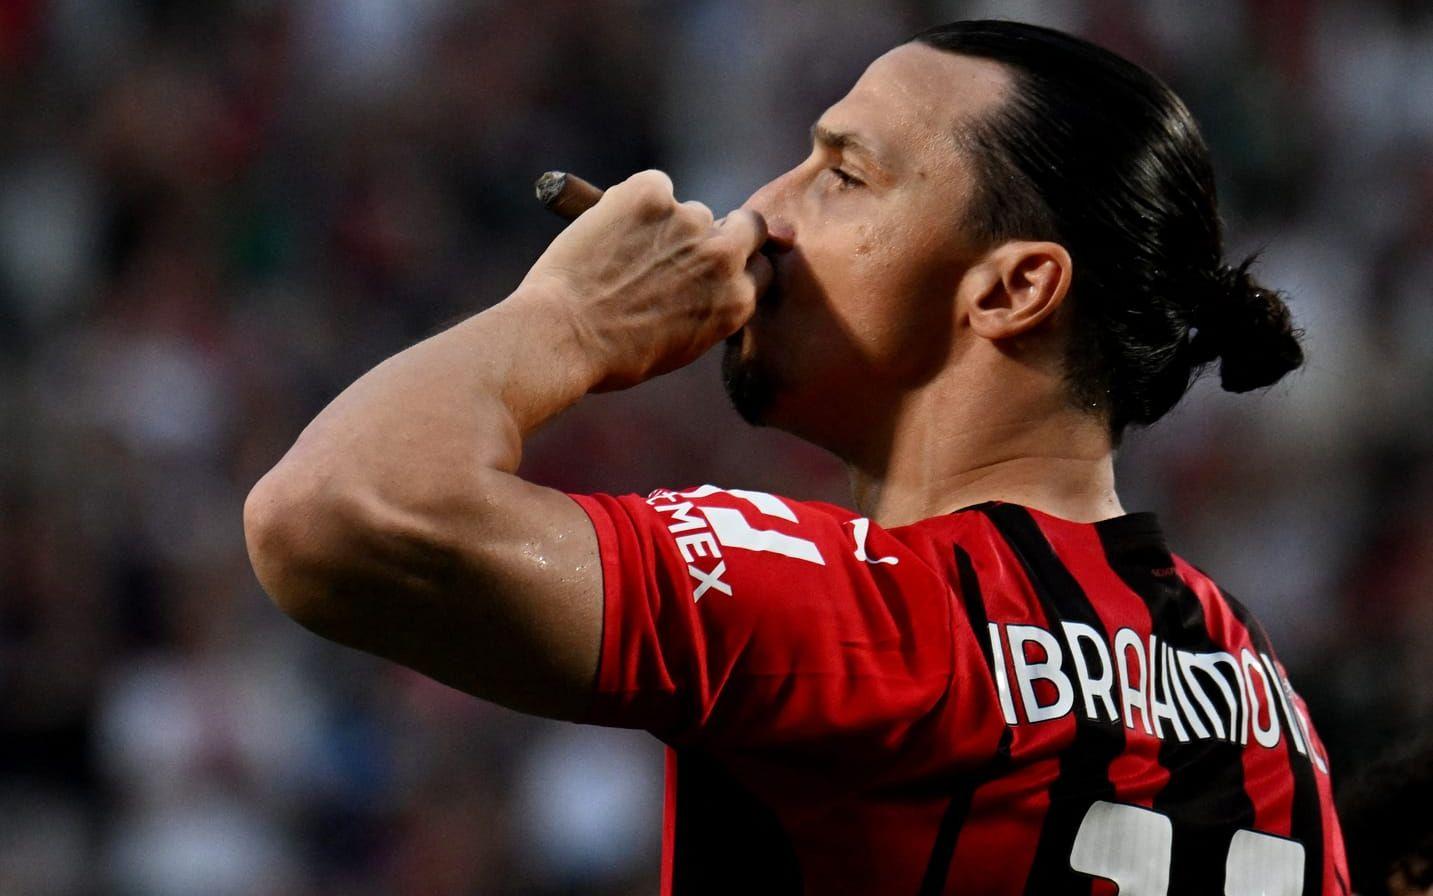 2022 vann han sin sista titel – Serie A med Milan. 